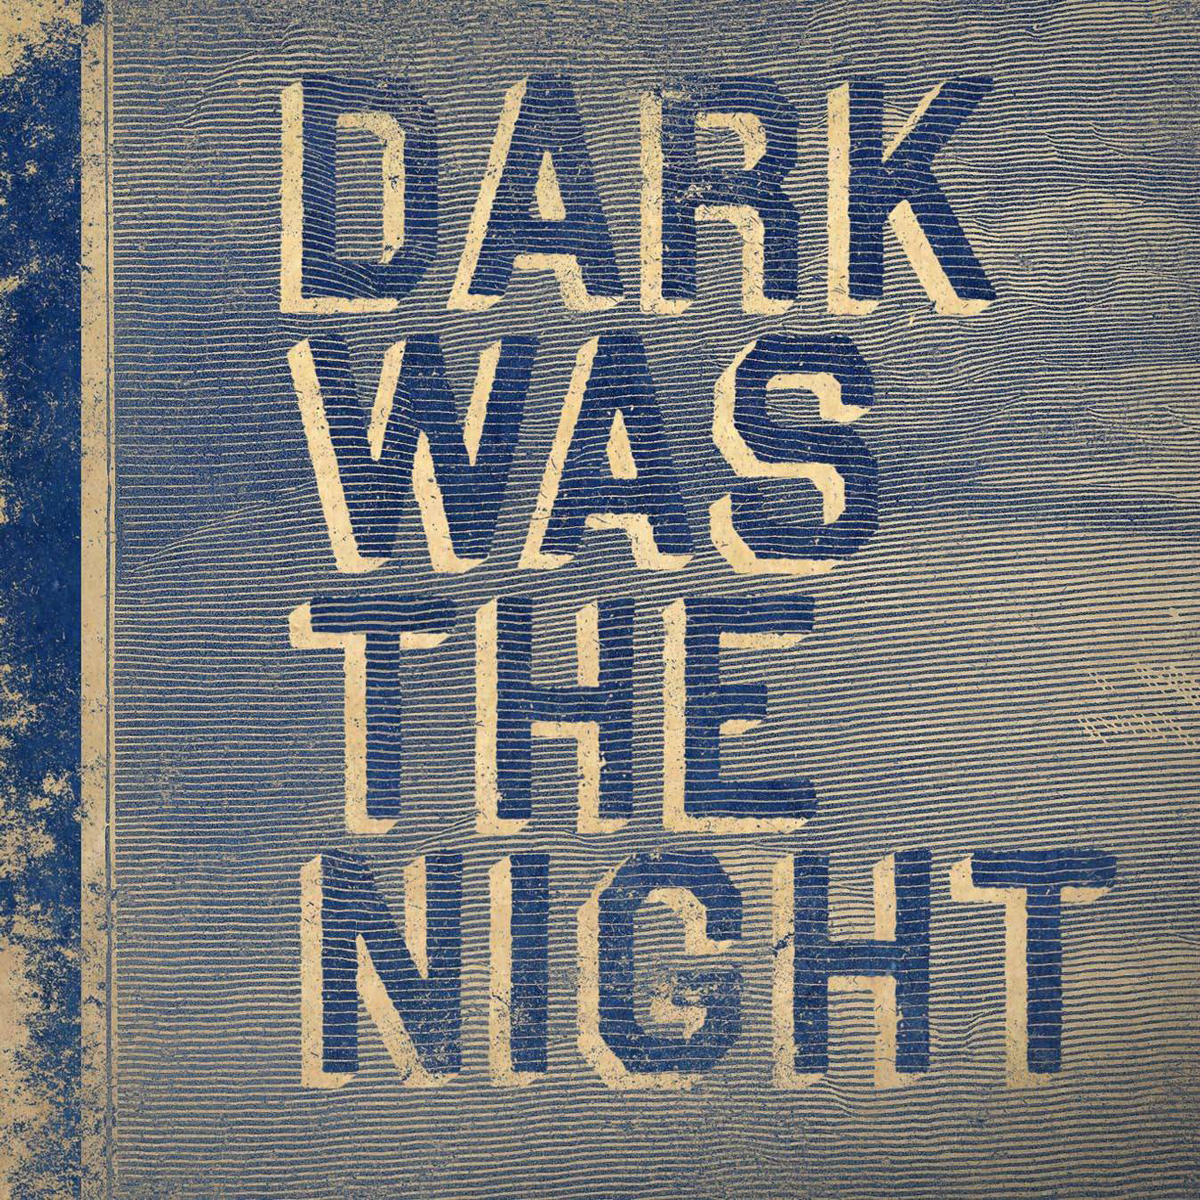 2014 Dark Was The Night